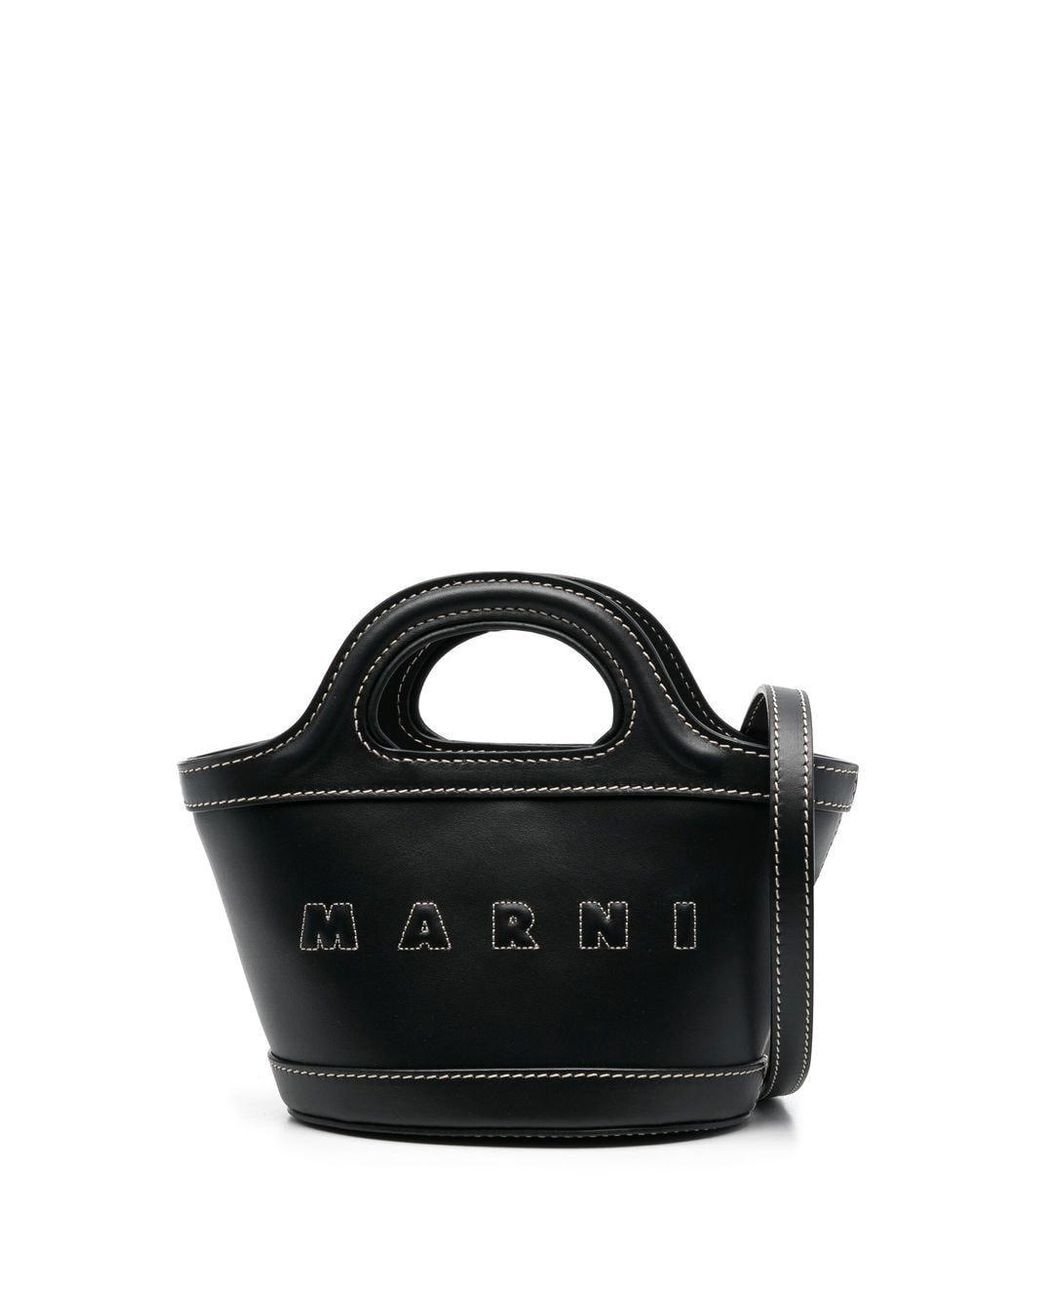 Marni Tropicalia Tote Bag in Black | Lyst